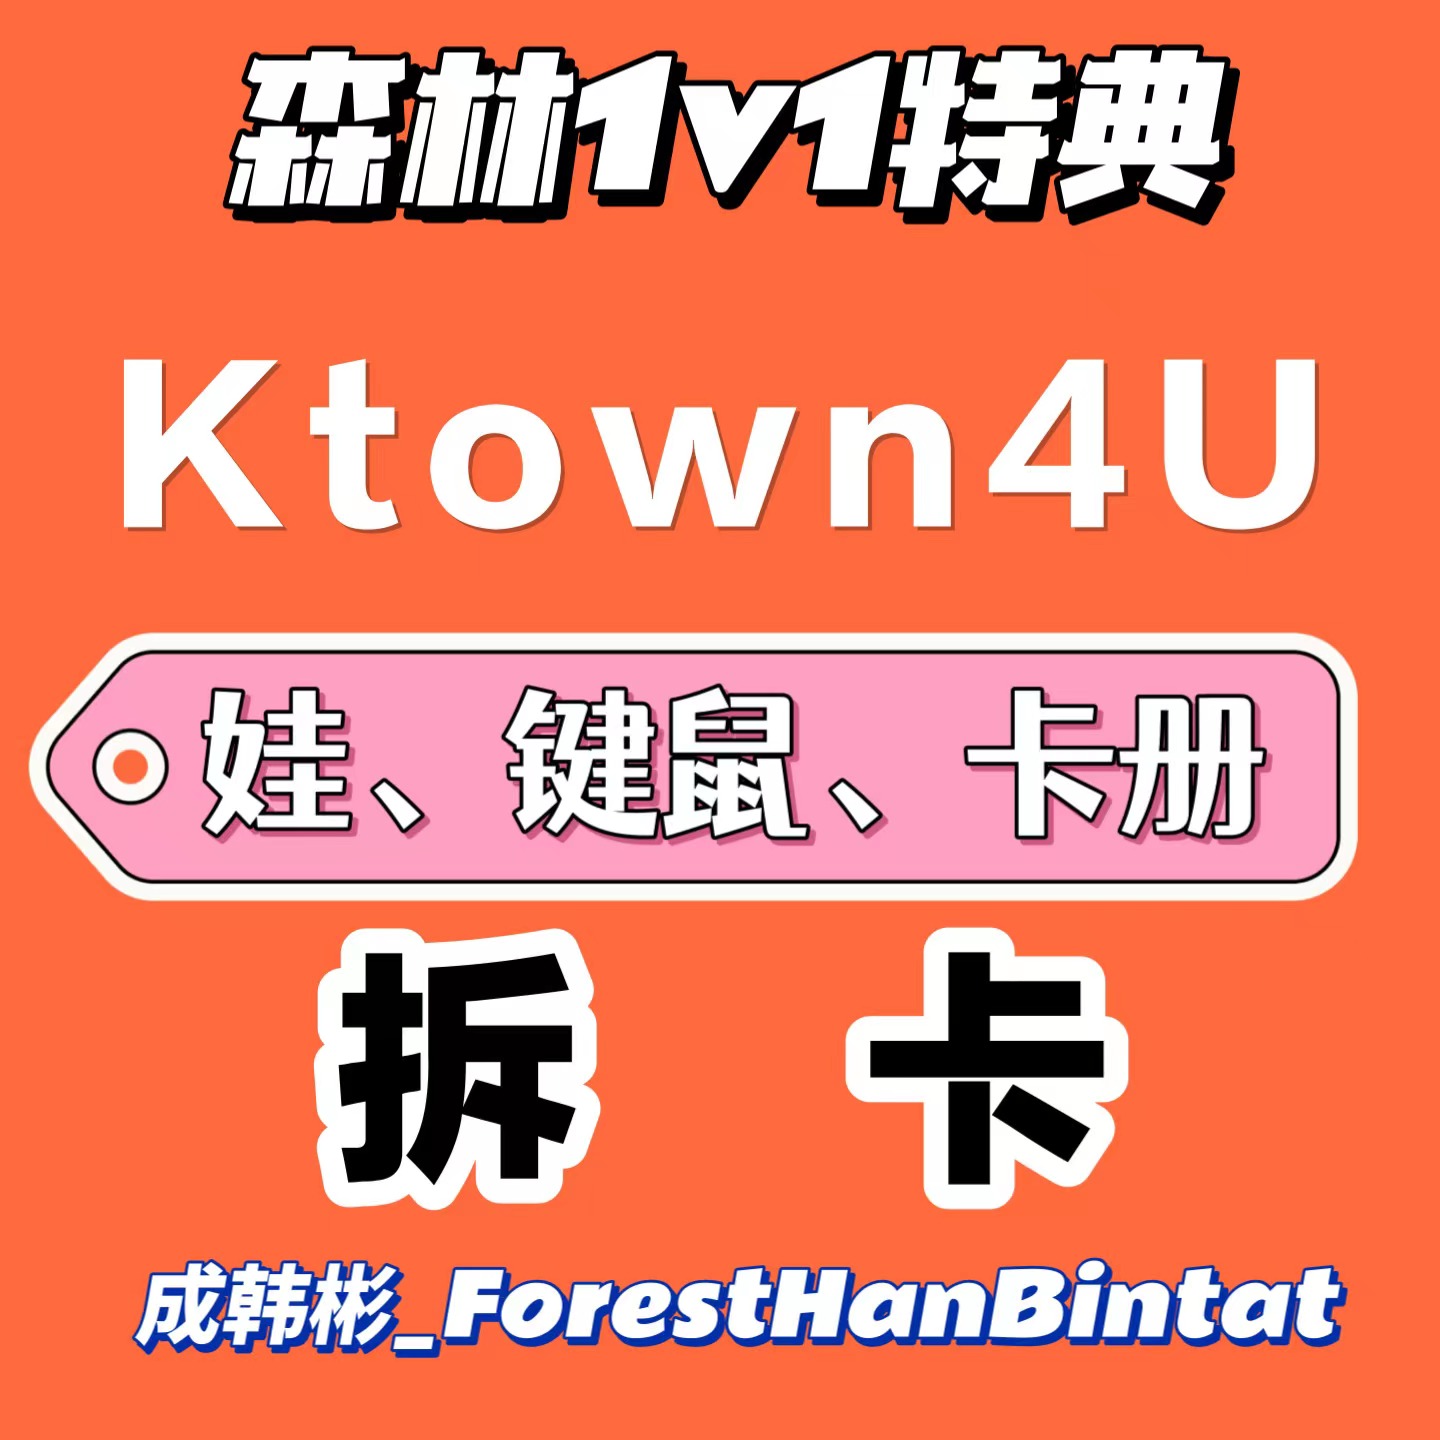 [森林自制特典1V1拆卡补专 *特典卡需要备注成员] [Ktown4u Special Gift] ZEROBASEONE - The 1st Mini Album [YOUTH IN THE SHADE] (Random Ver.)_成韩彬_ForestHanBintat